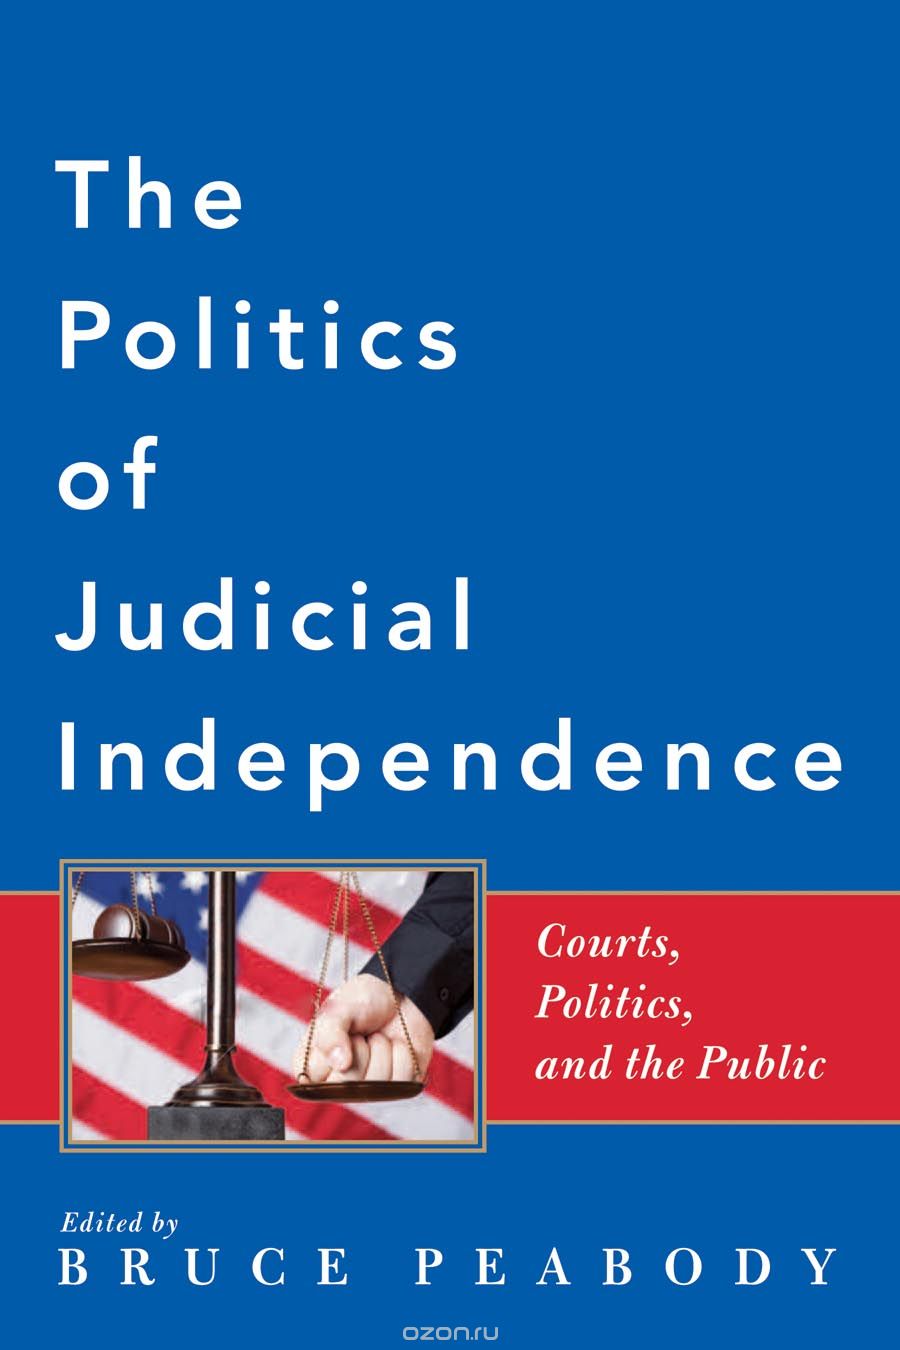 Скачать книгу "The Politics of Judicial Independence – Courts, Politics and the Public"